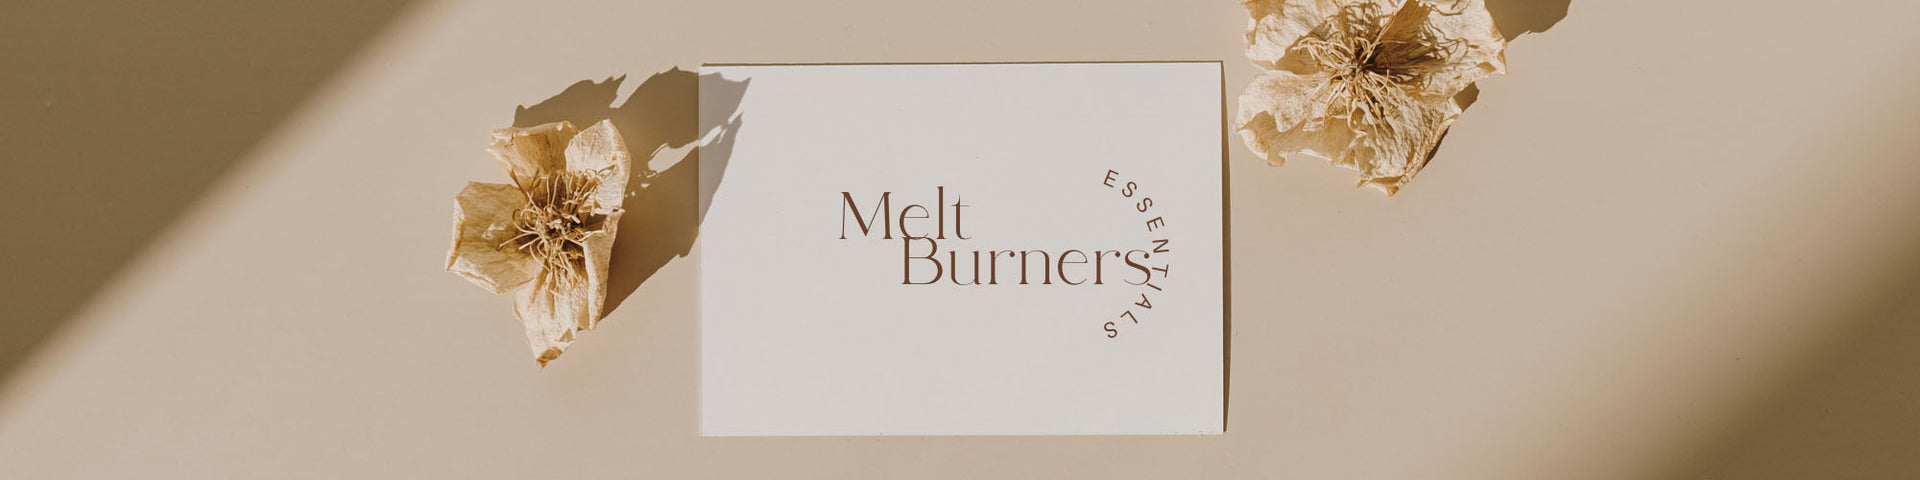 Melt Burners + Accessories